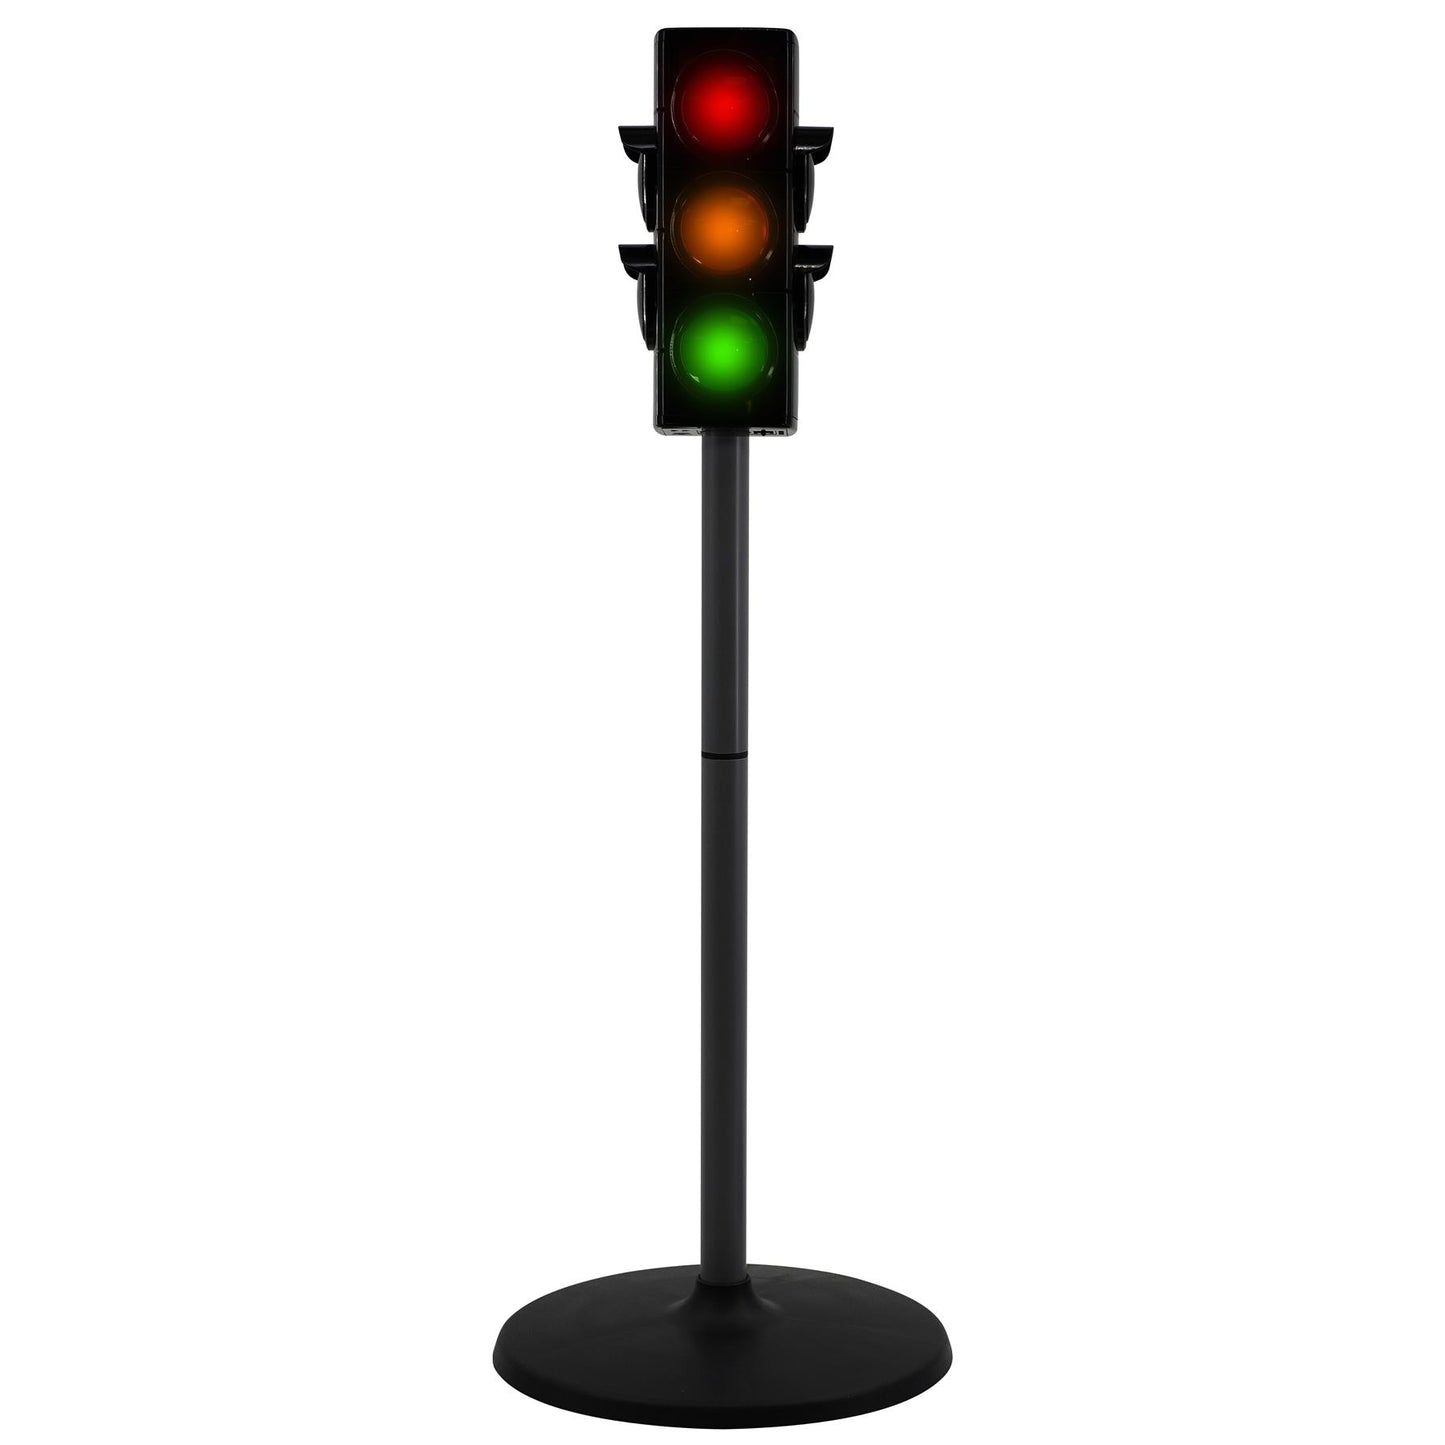 Traffic Signal & Crosswalk Lights Playset by The Magic Toy Shop - UKBuyZone